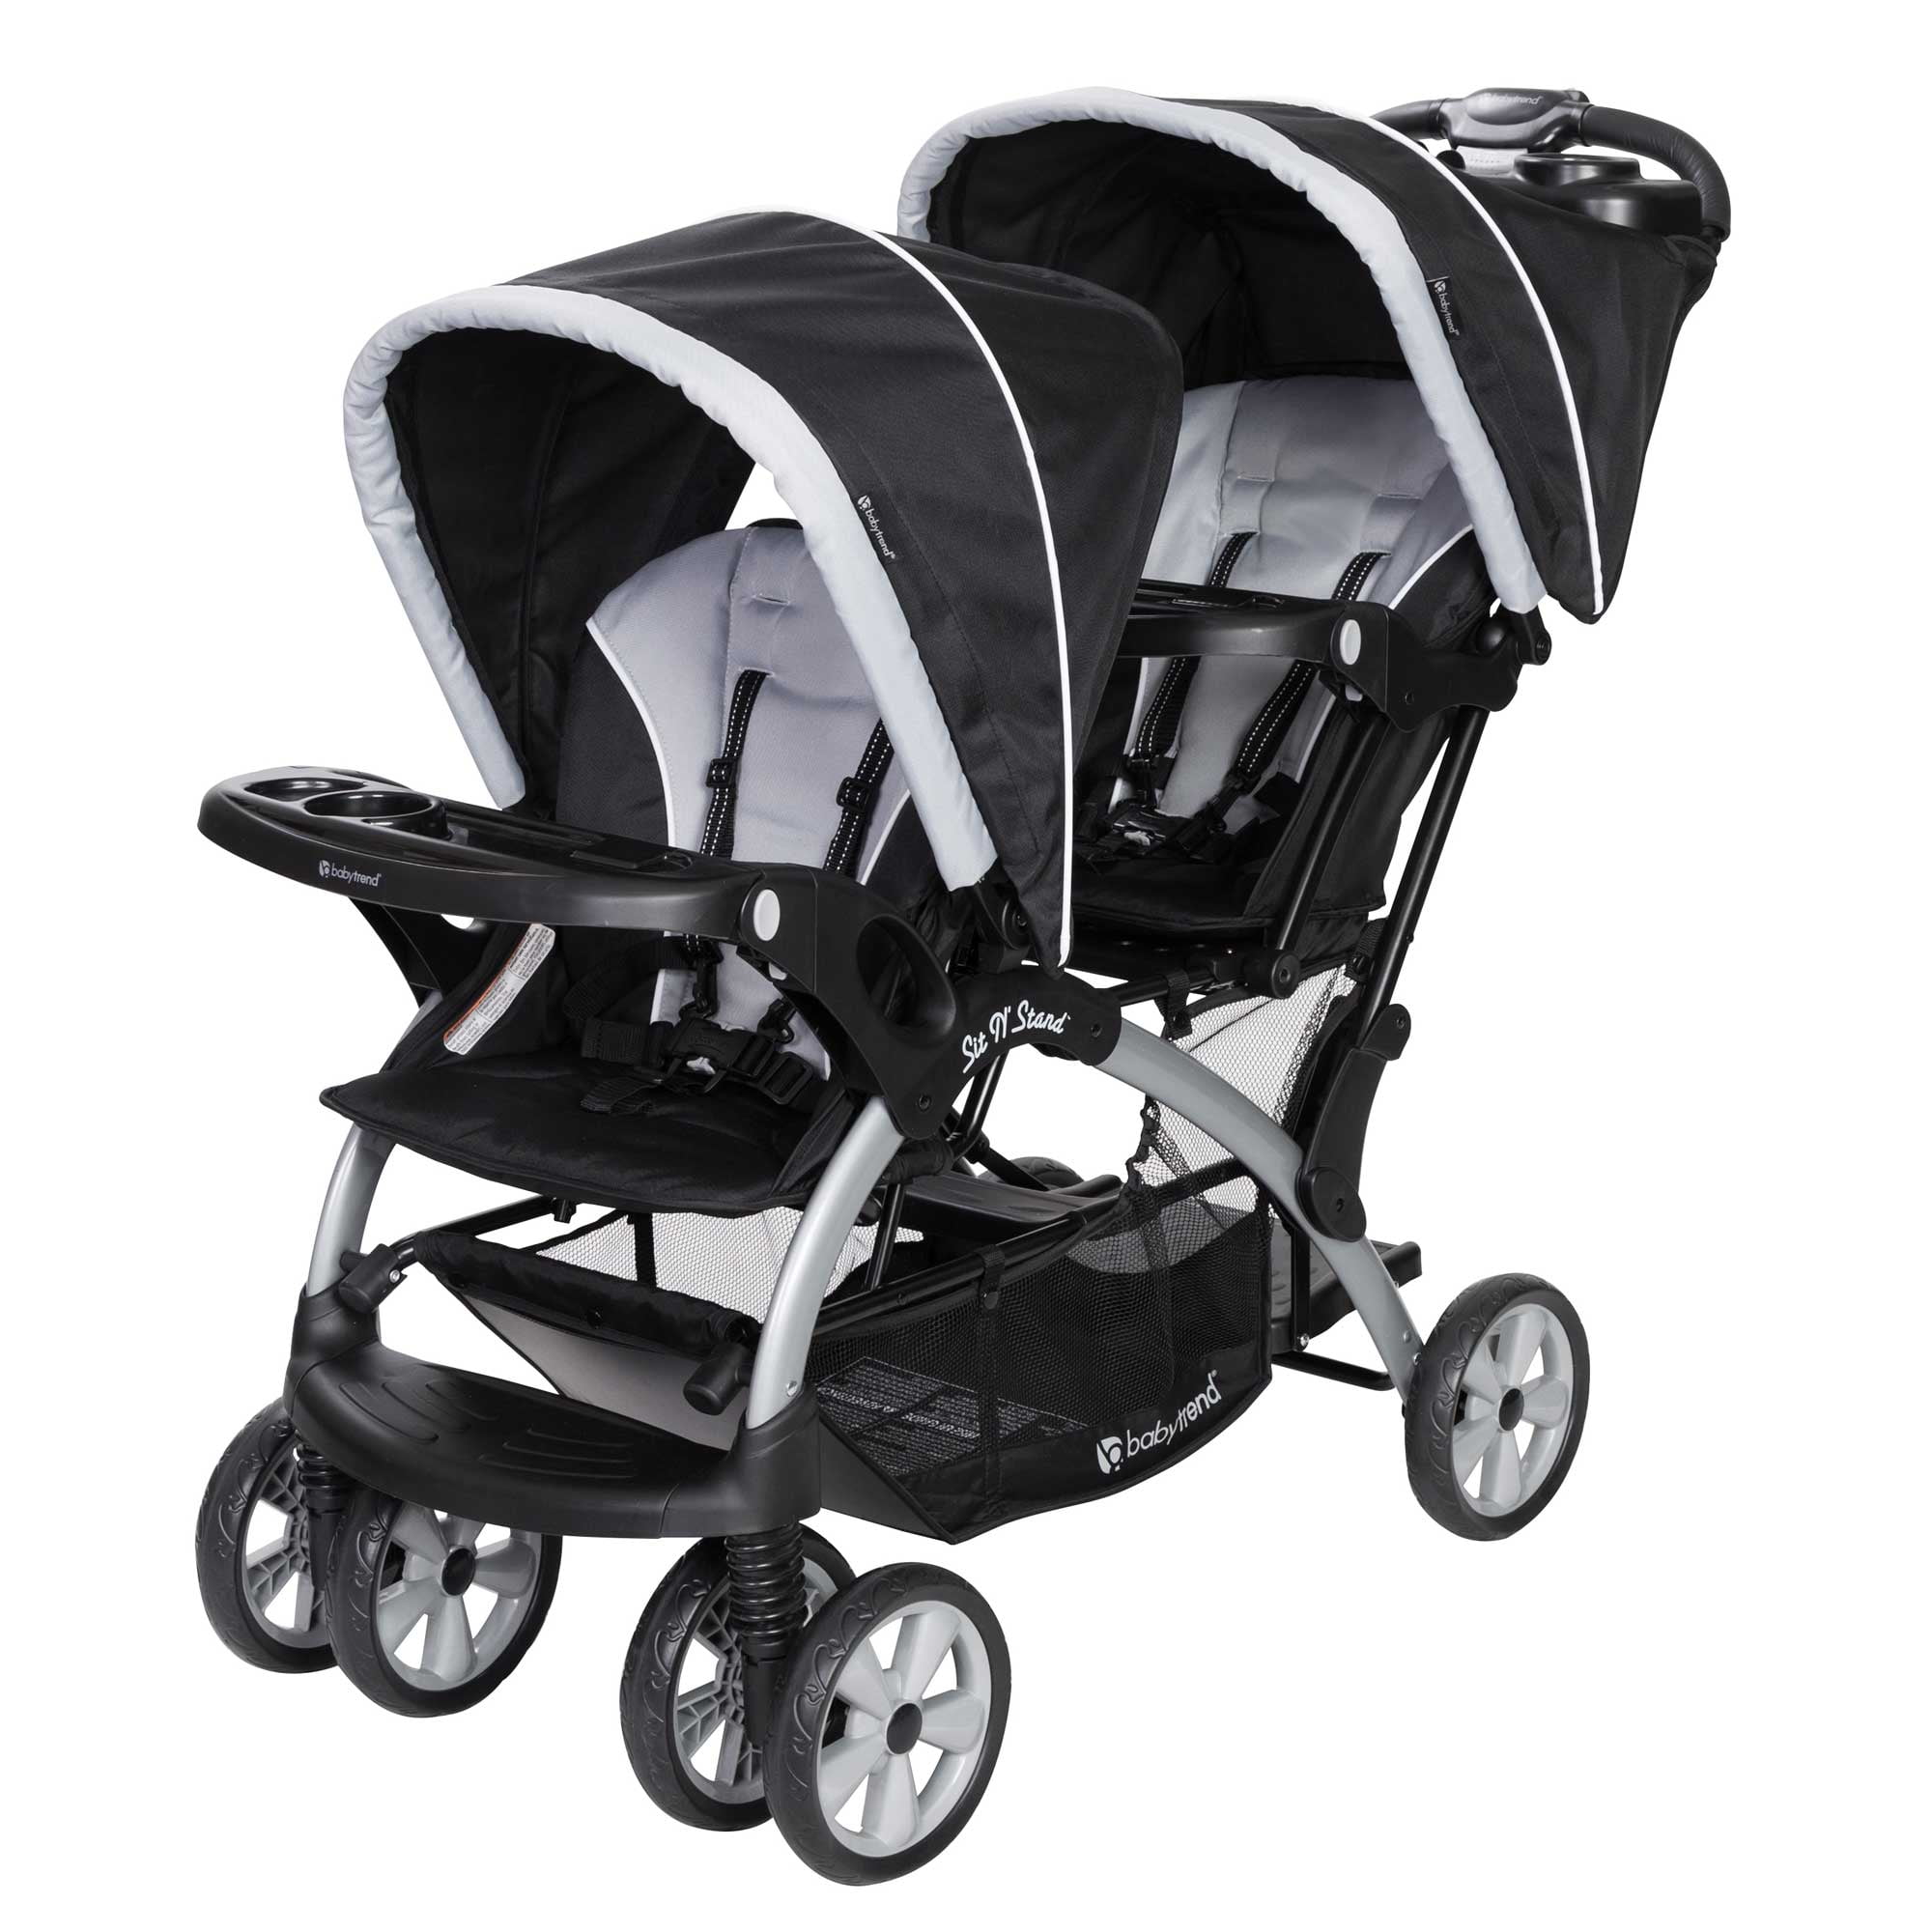 Baby Trend Sit N Stand Double Stroller, Stormy - Walmart.com - Walmart.com